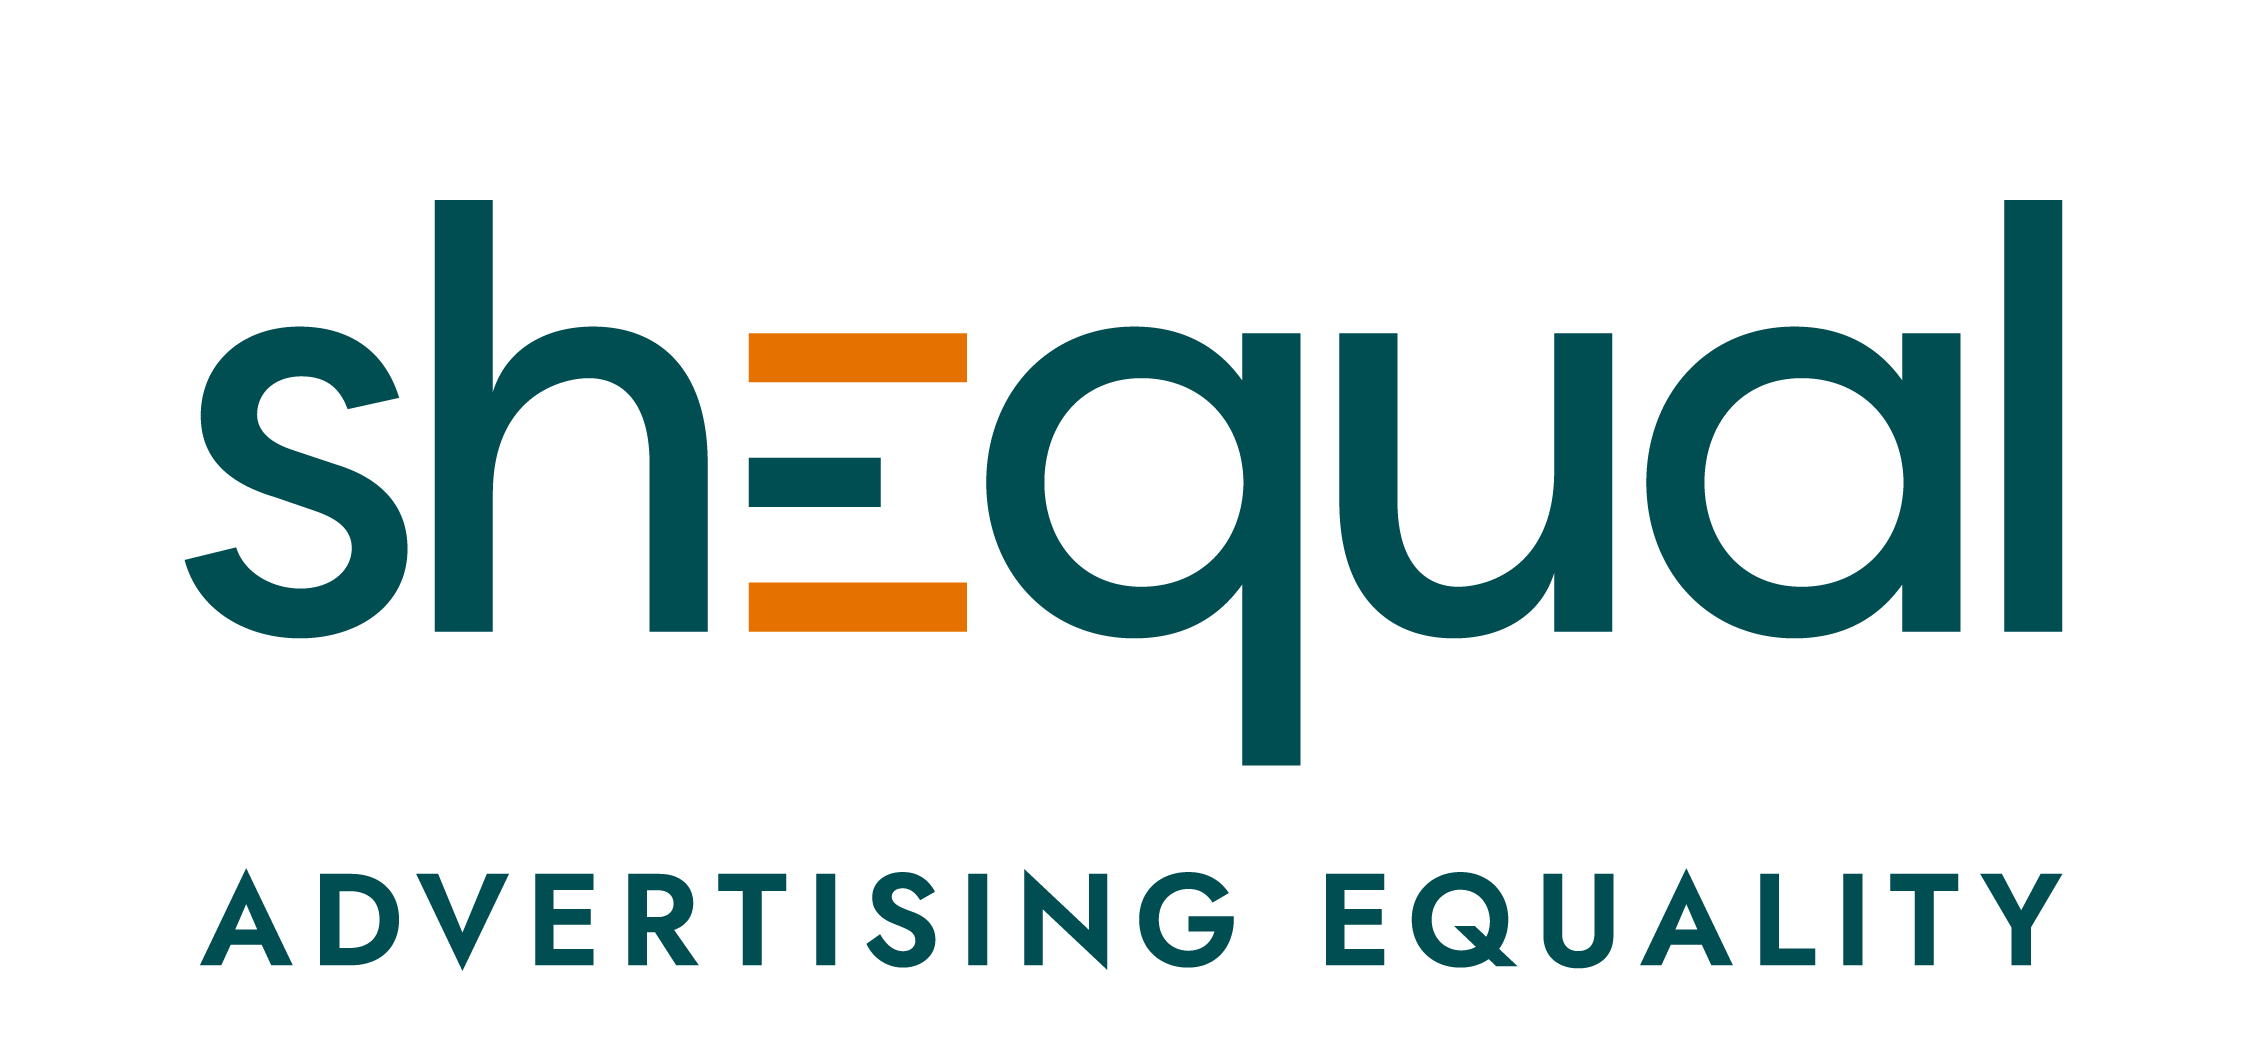 Shequal advertising equality logo